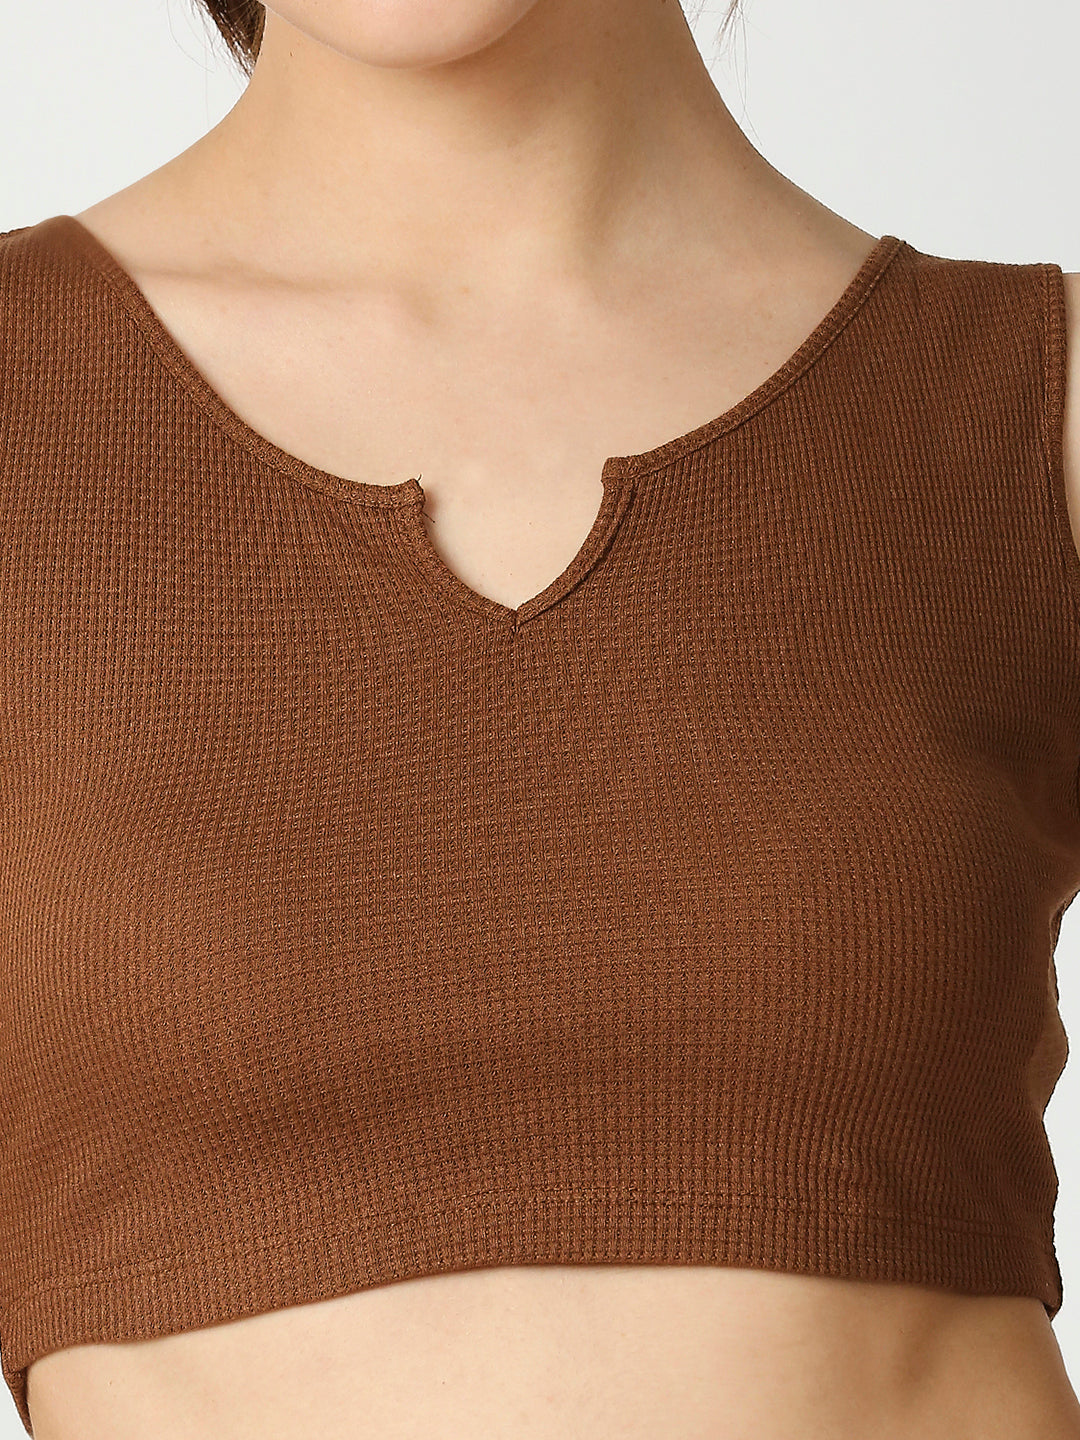 Buy Blamblack Women's Dark Brown Color V-Neck Crop Top